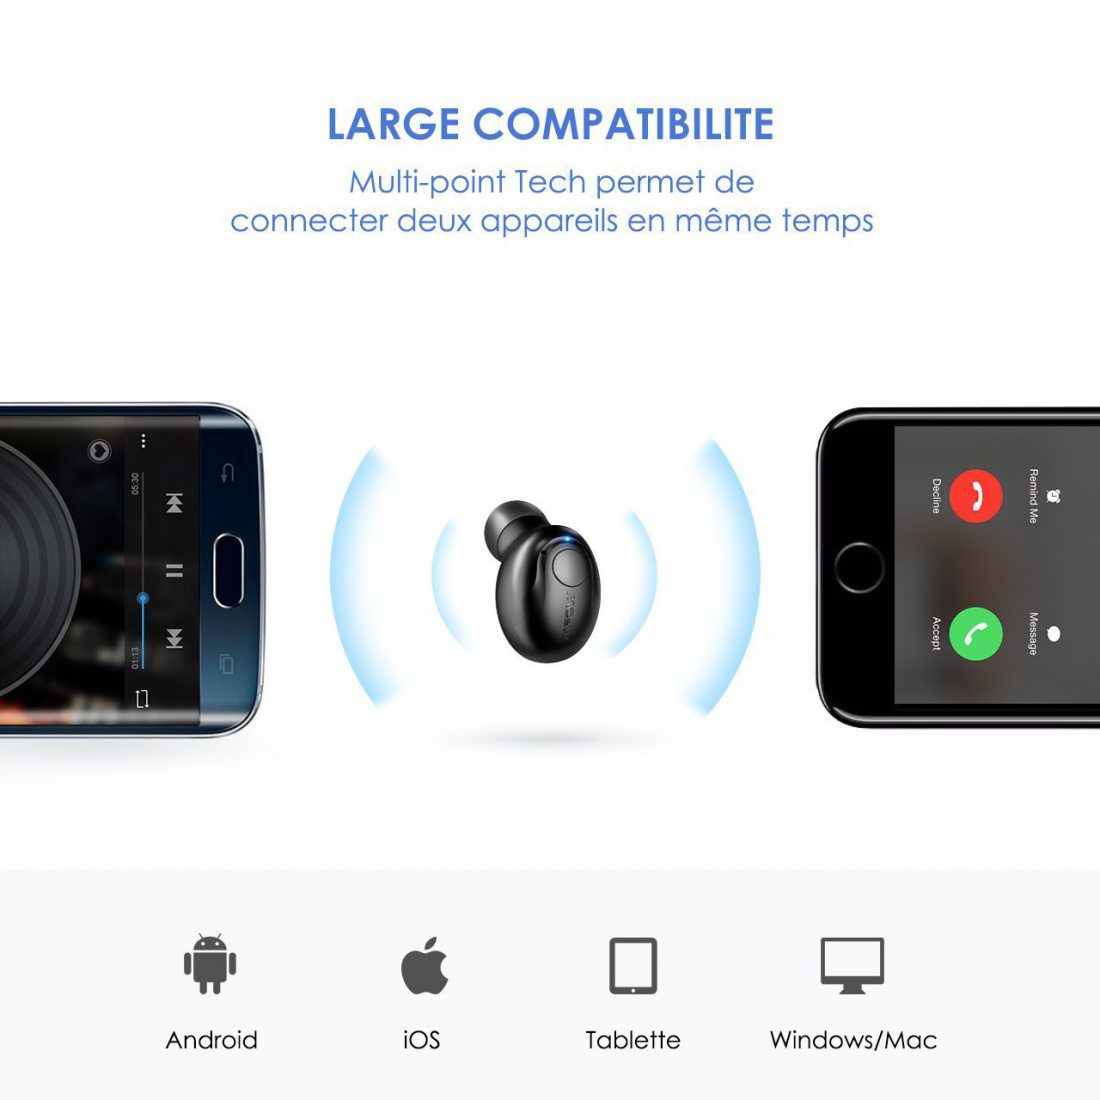 Samsung Huawei Mpow Oreillette Bluetooth Mini Ecouteur sans Fil Bluetooth 4.1 Oreillette sans Fil Invisible Casque Audio Intra-Auriculaire avec Micro 2 Chargeurs Magnétiques etc. pour iPhone